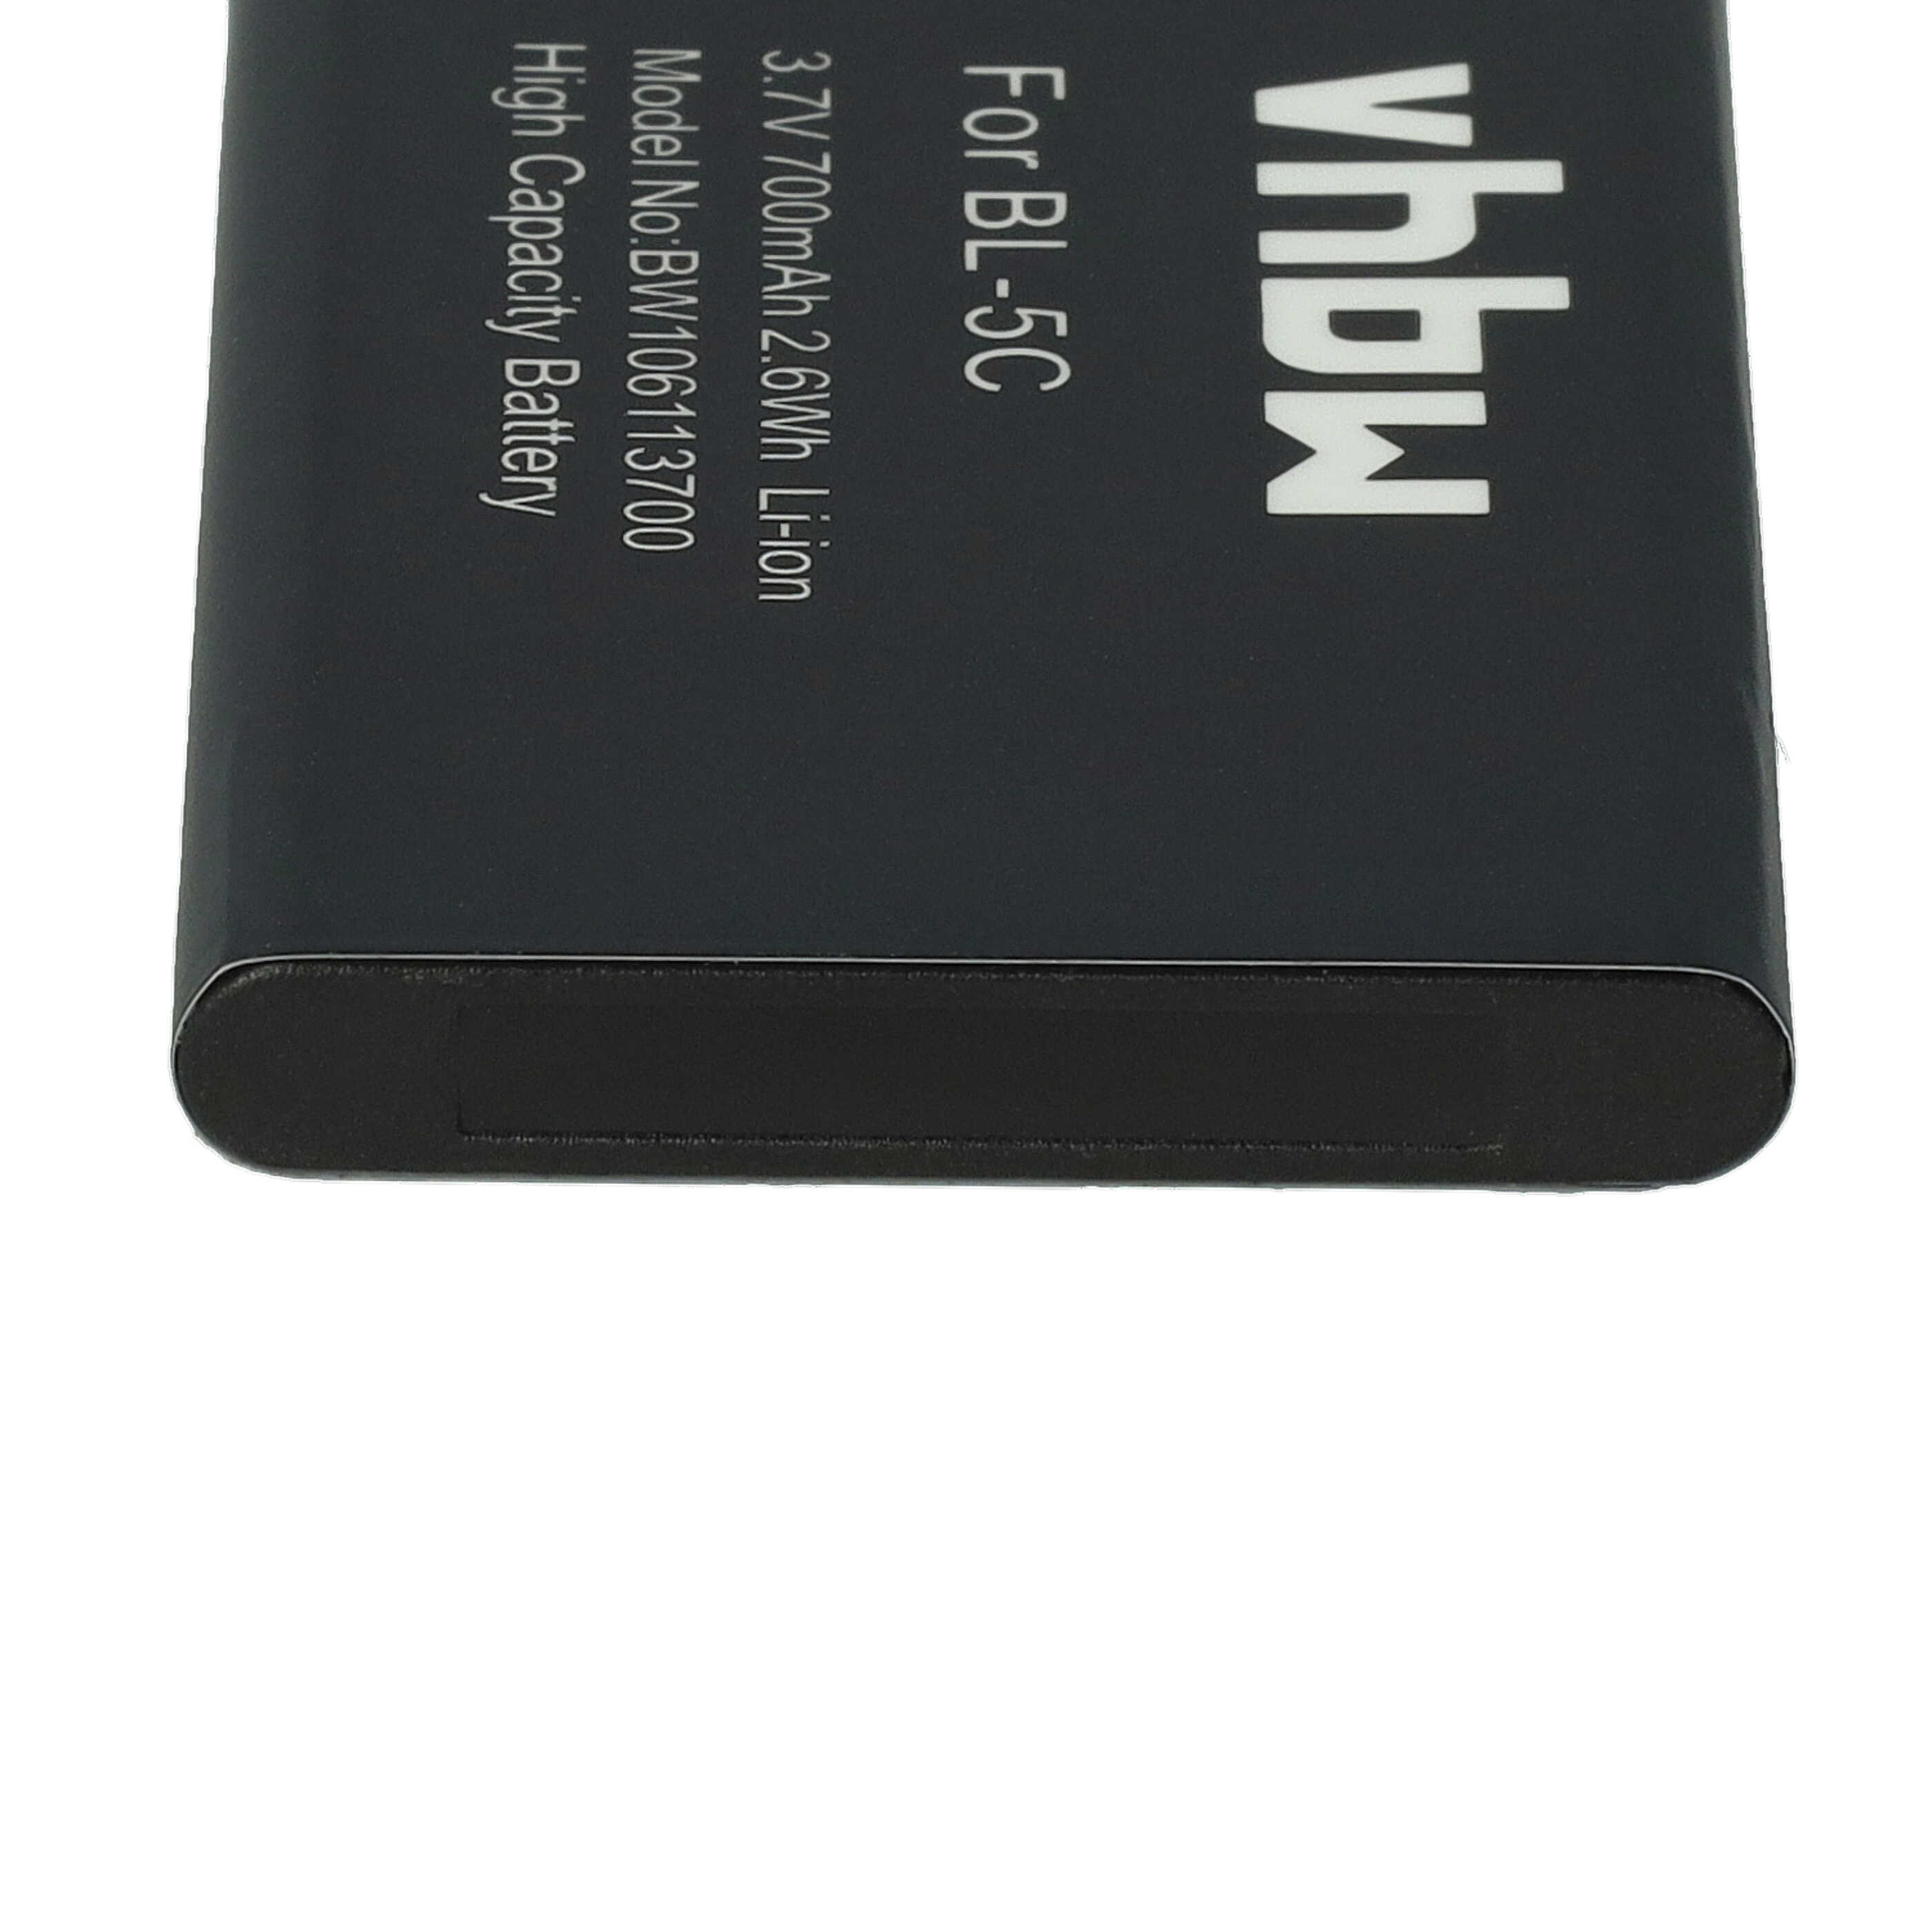 Akumulator bateria do telefonu smartfona zam. Swissvoice 20405928 - 700mAh, 3,7V, Li-Ion